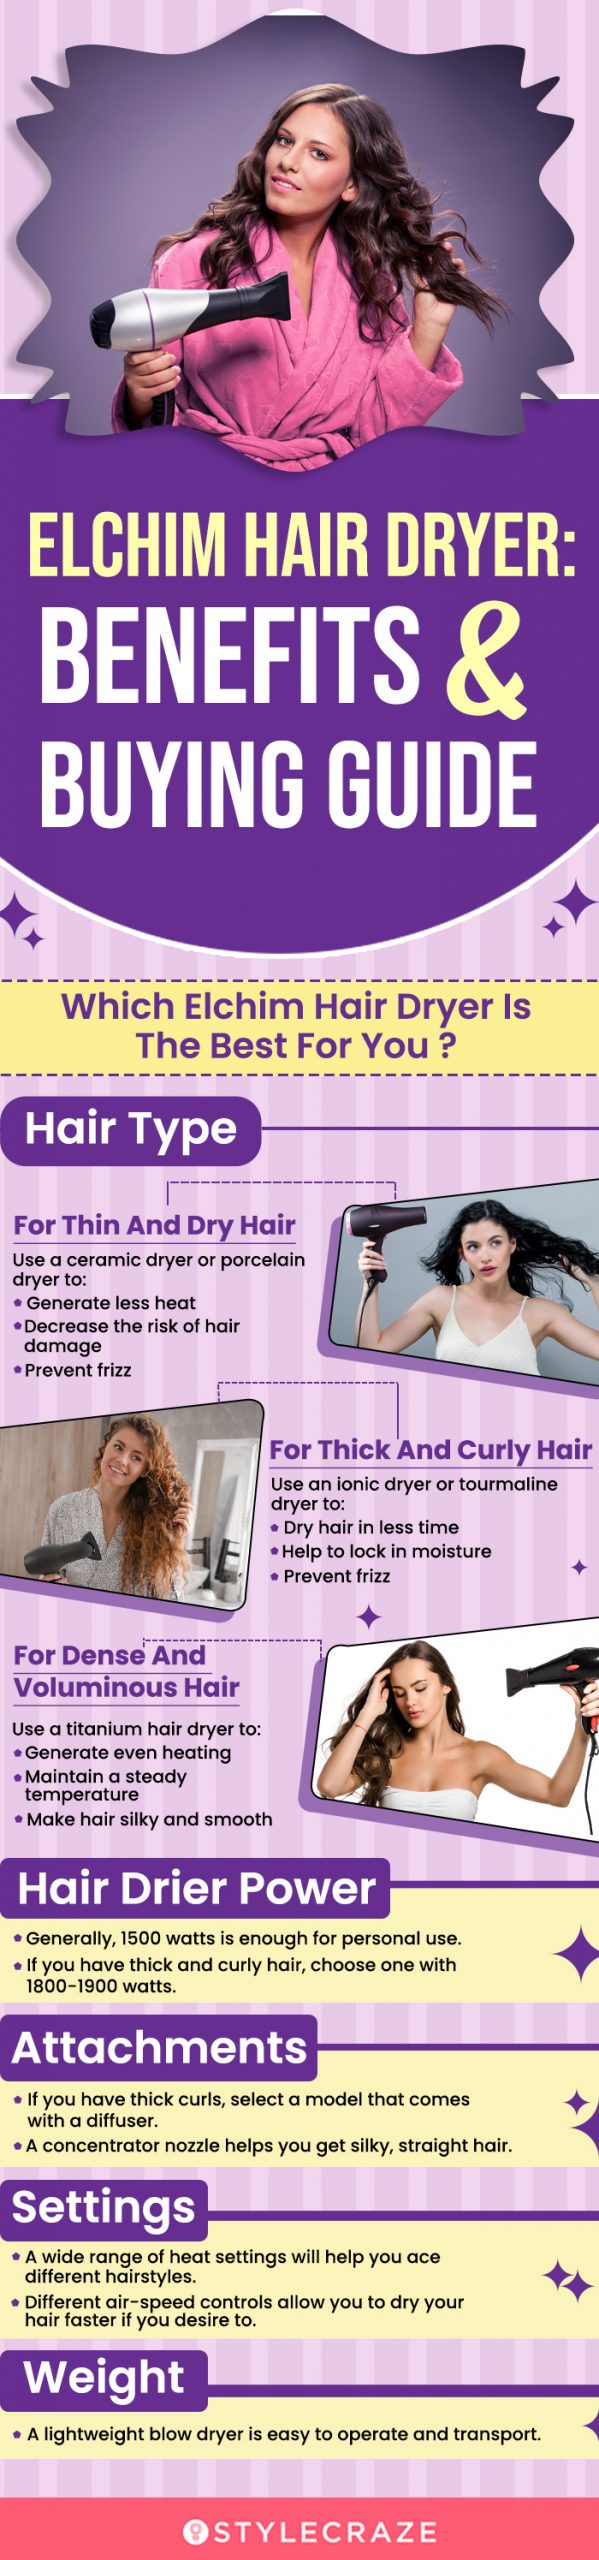 Elchim Hair Dryer: Benefits & Buying Guide [infographic]